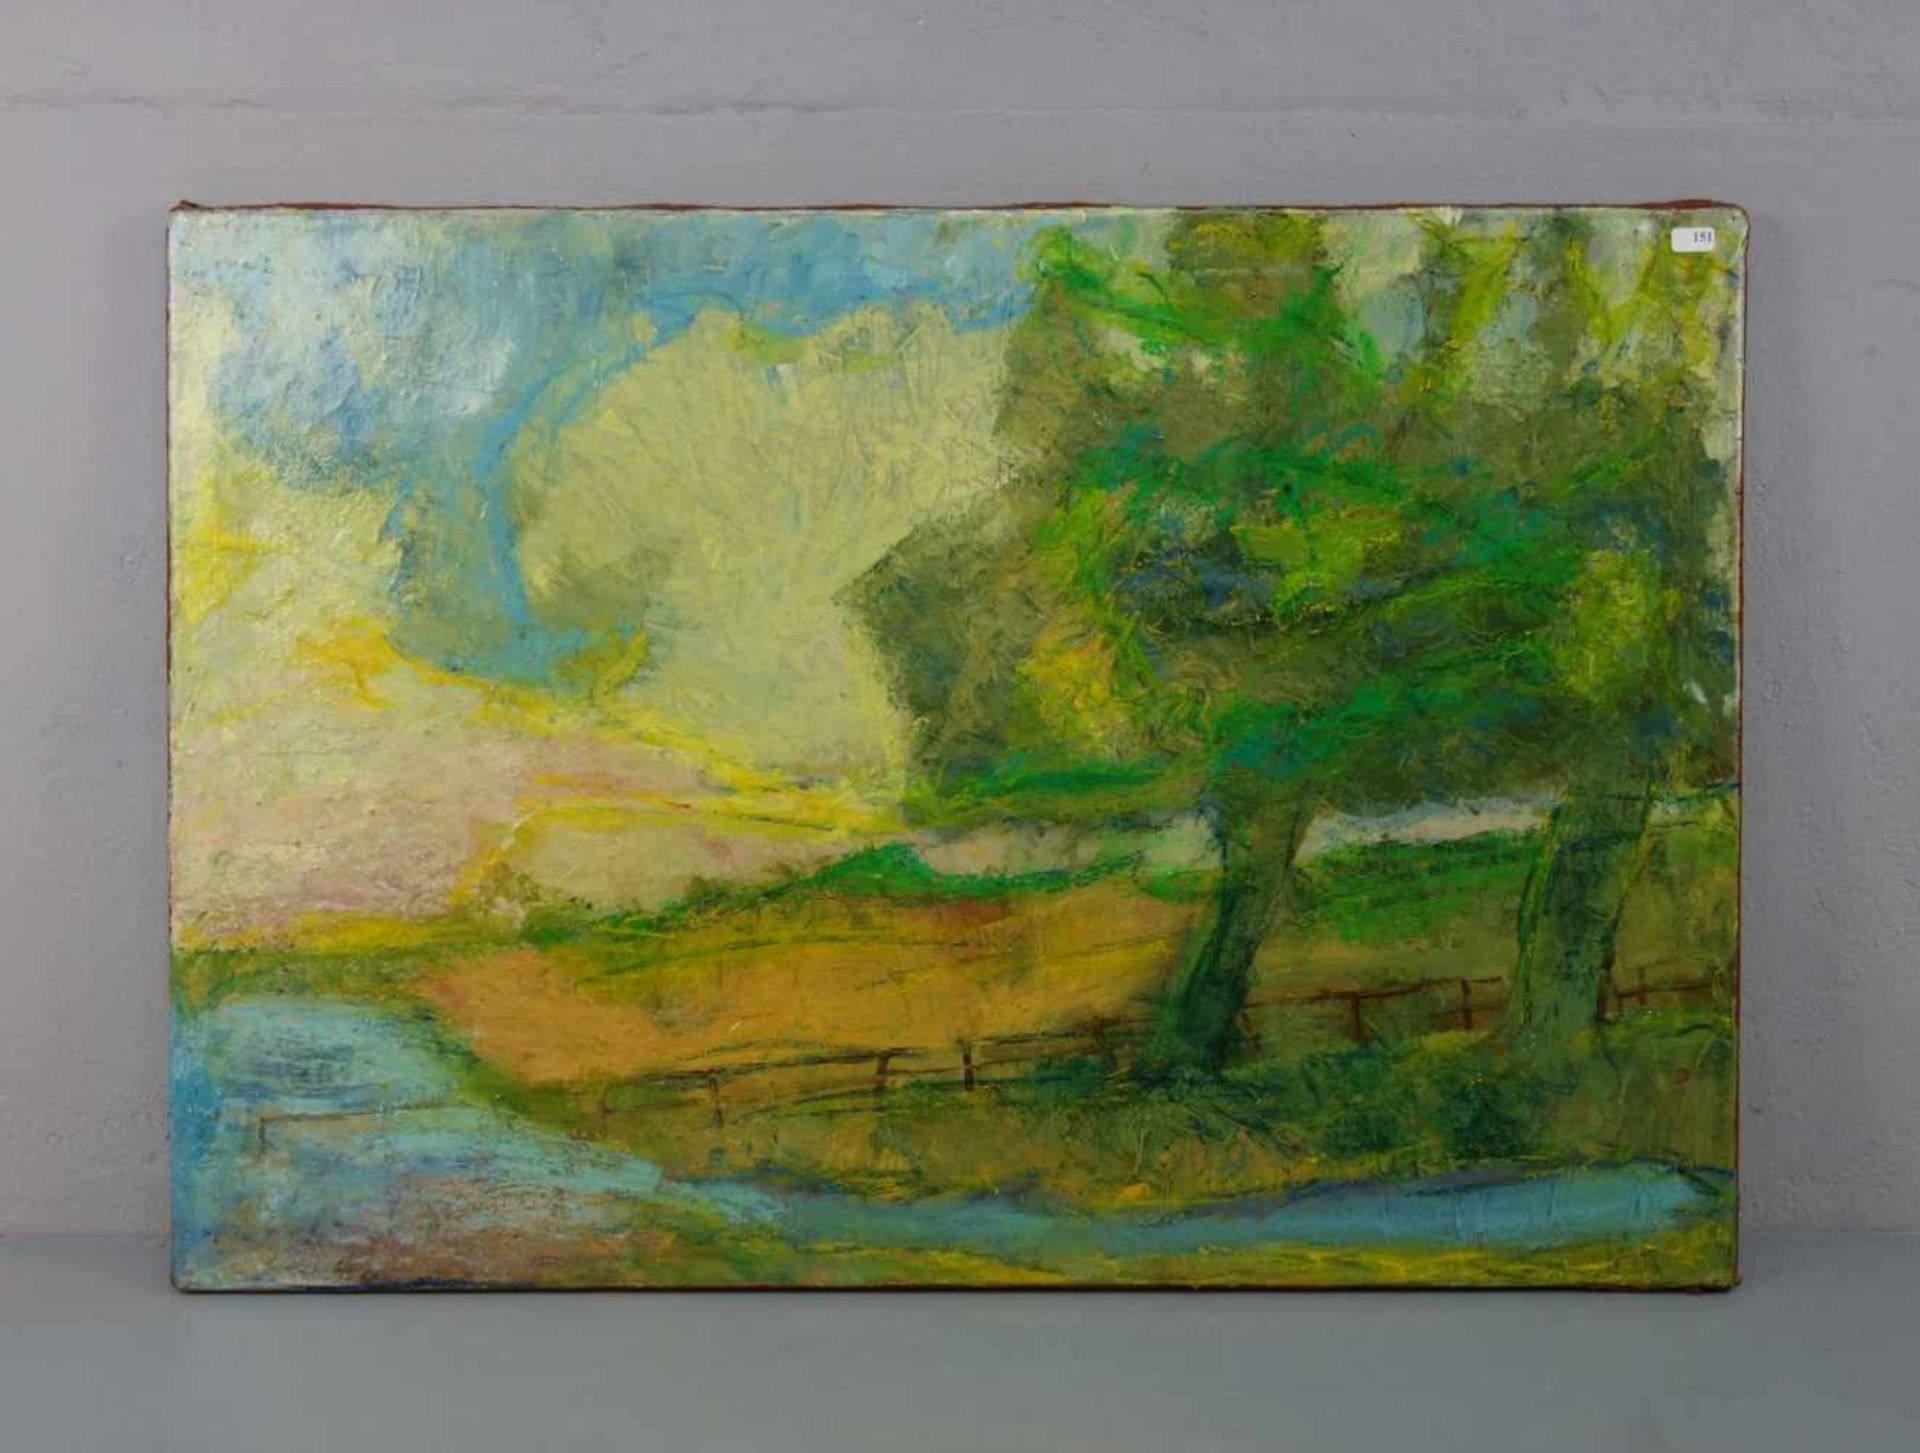 MONOGRAMMIST (VR, 19./20. Jh.), Gemälde / painting: "Frühlingslandschaft mit Flusslauf", Öl und